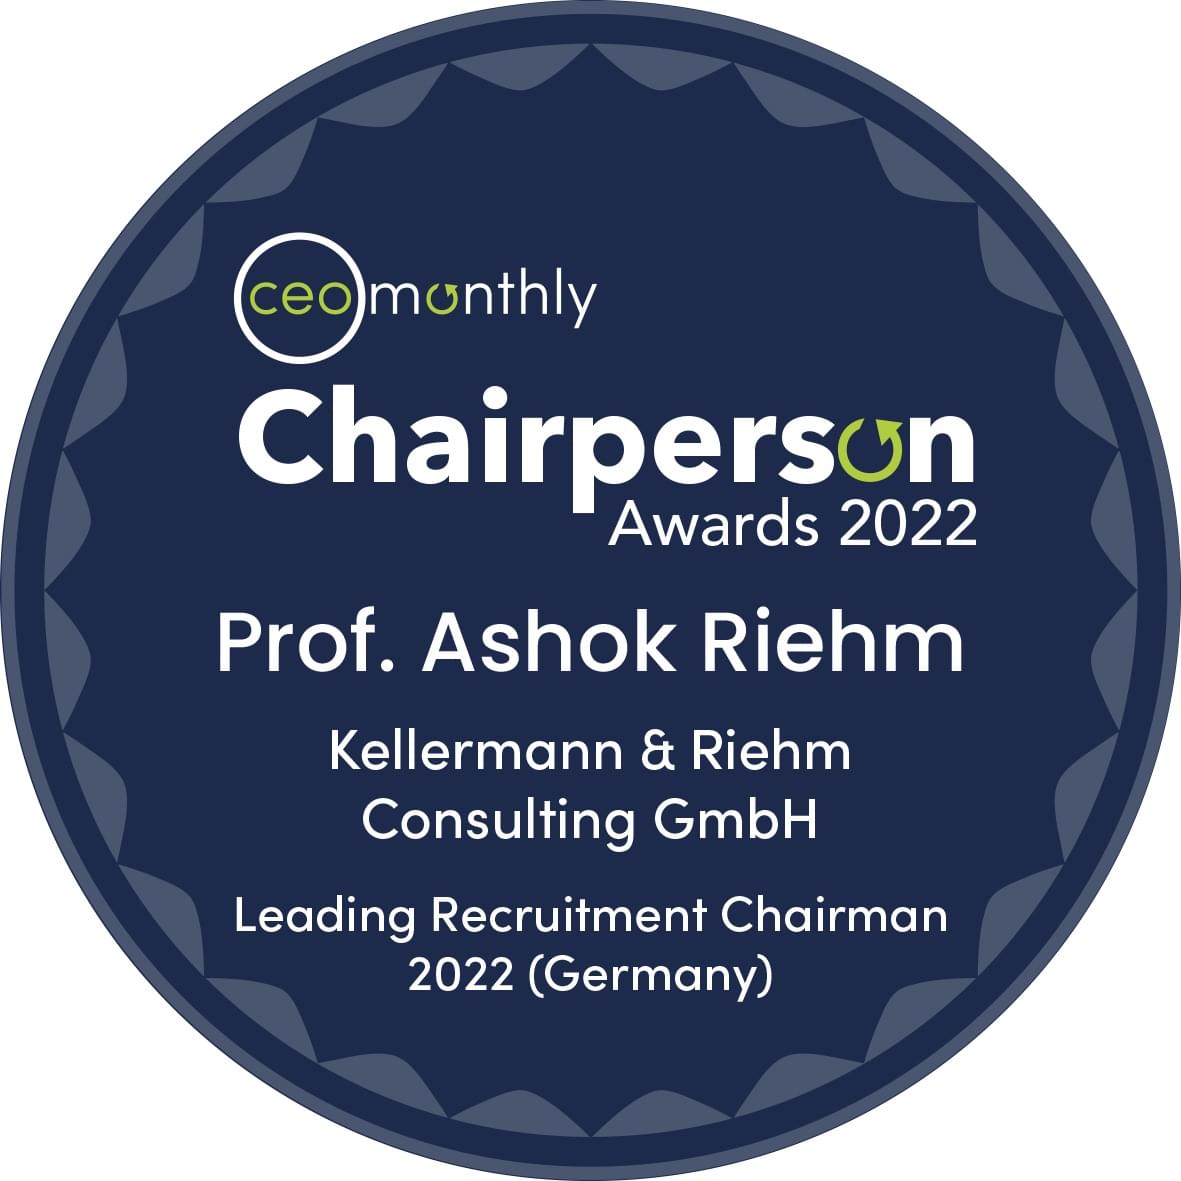 Prof. Ashok Riehm Leading Recruitment Chairman 2022